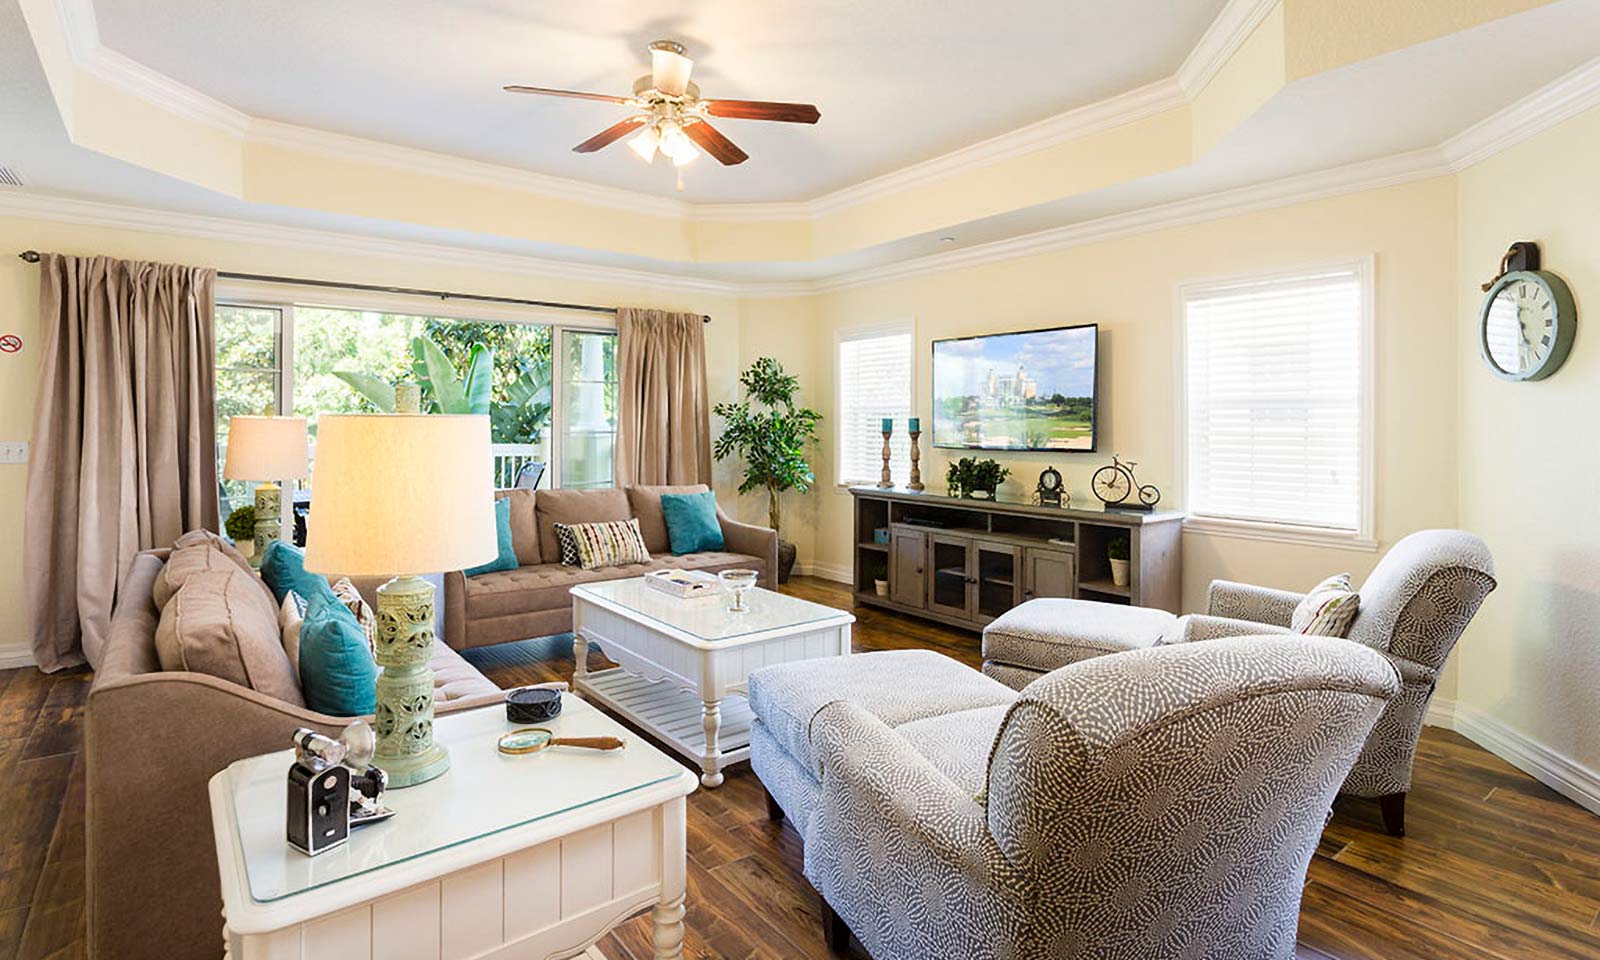 [amenities:Living-Room:2] Living Room